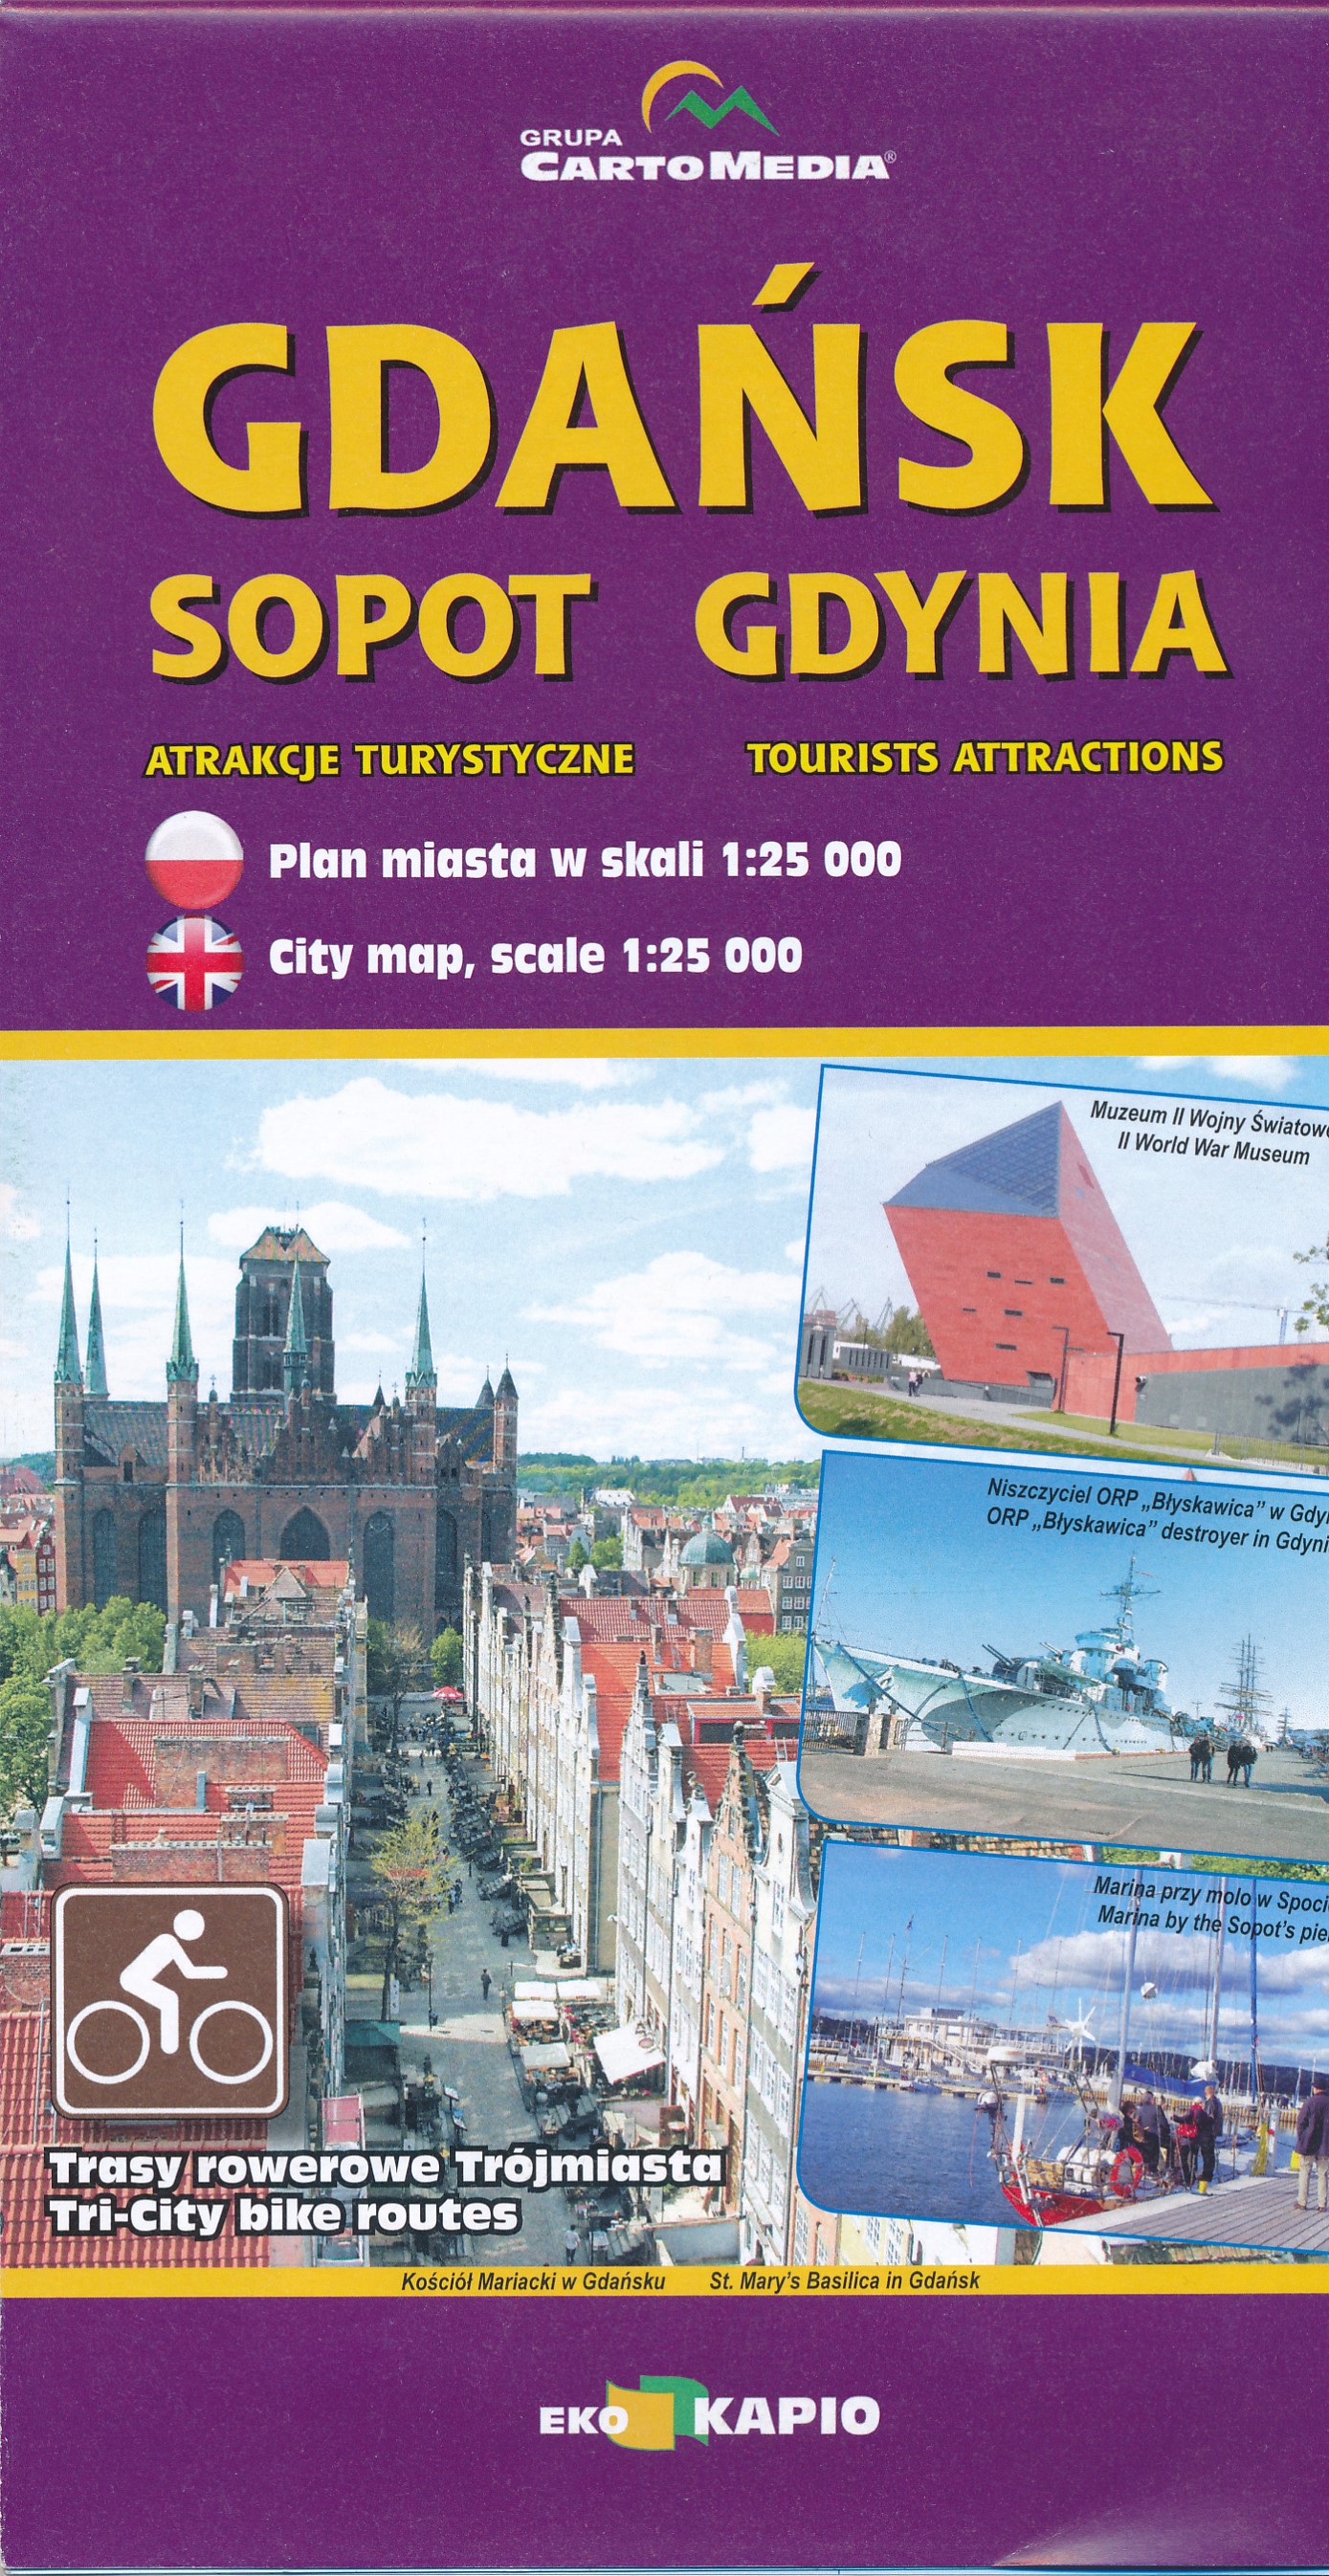 Online bestellen: Stadsplattegrond Gdansk | Cartomedia